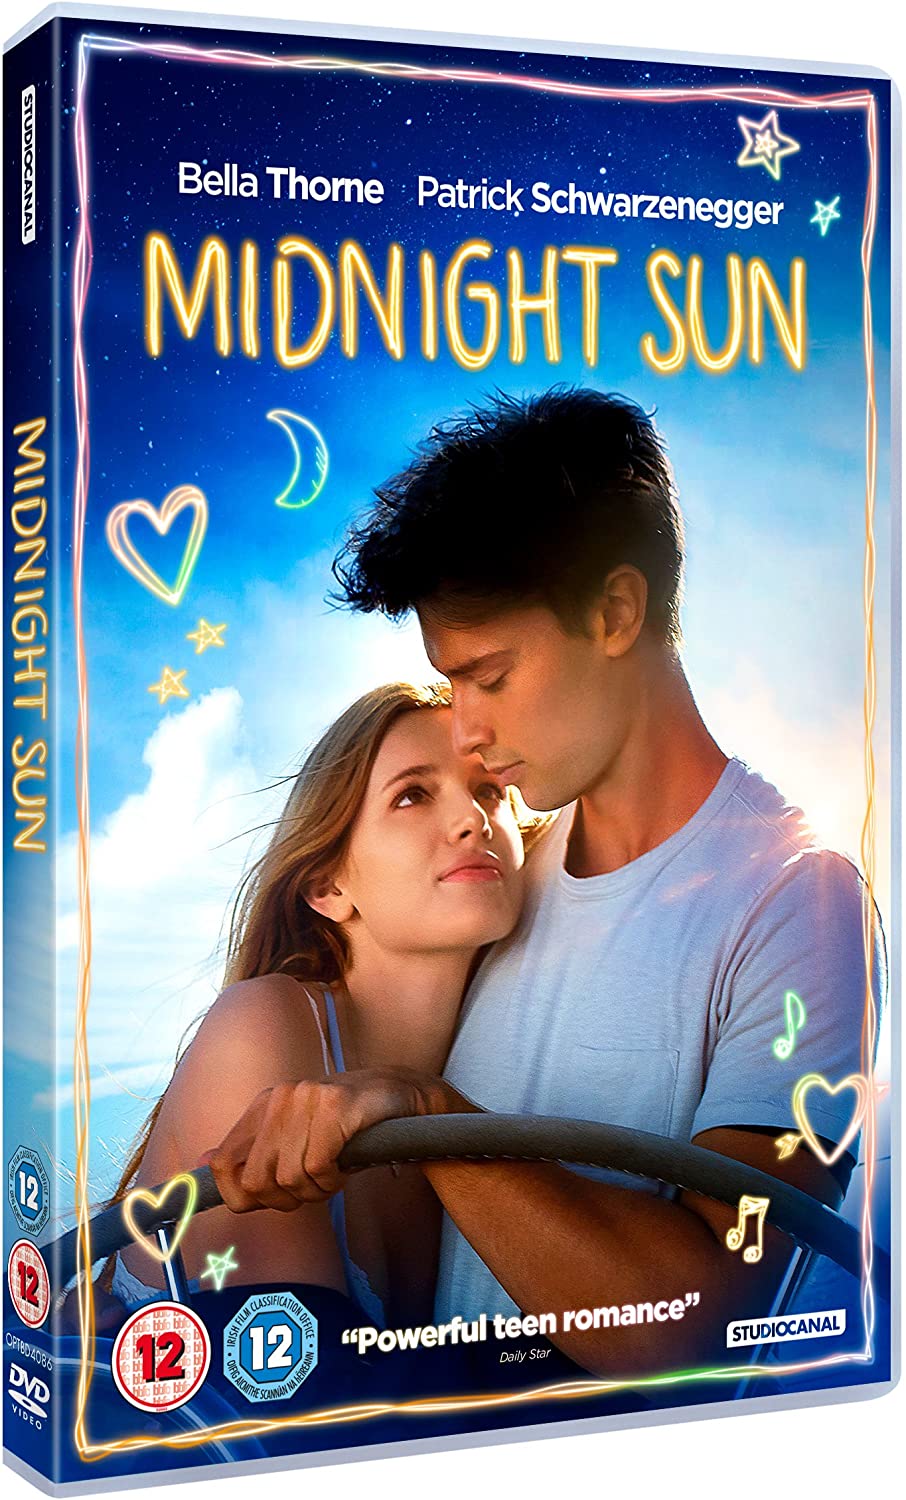 Midnight Sun - Romance/Drama [DVD]